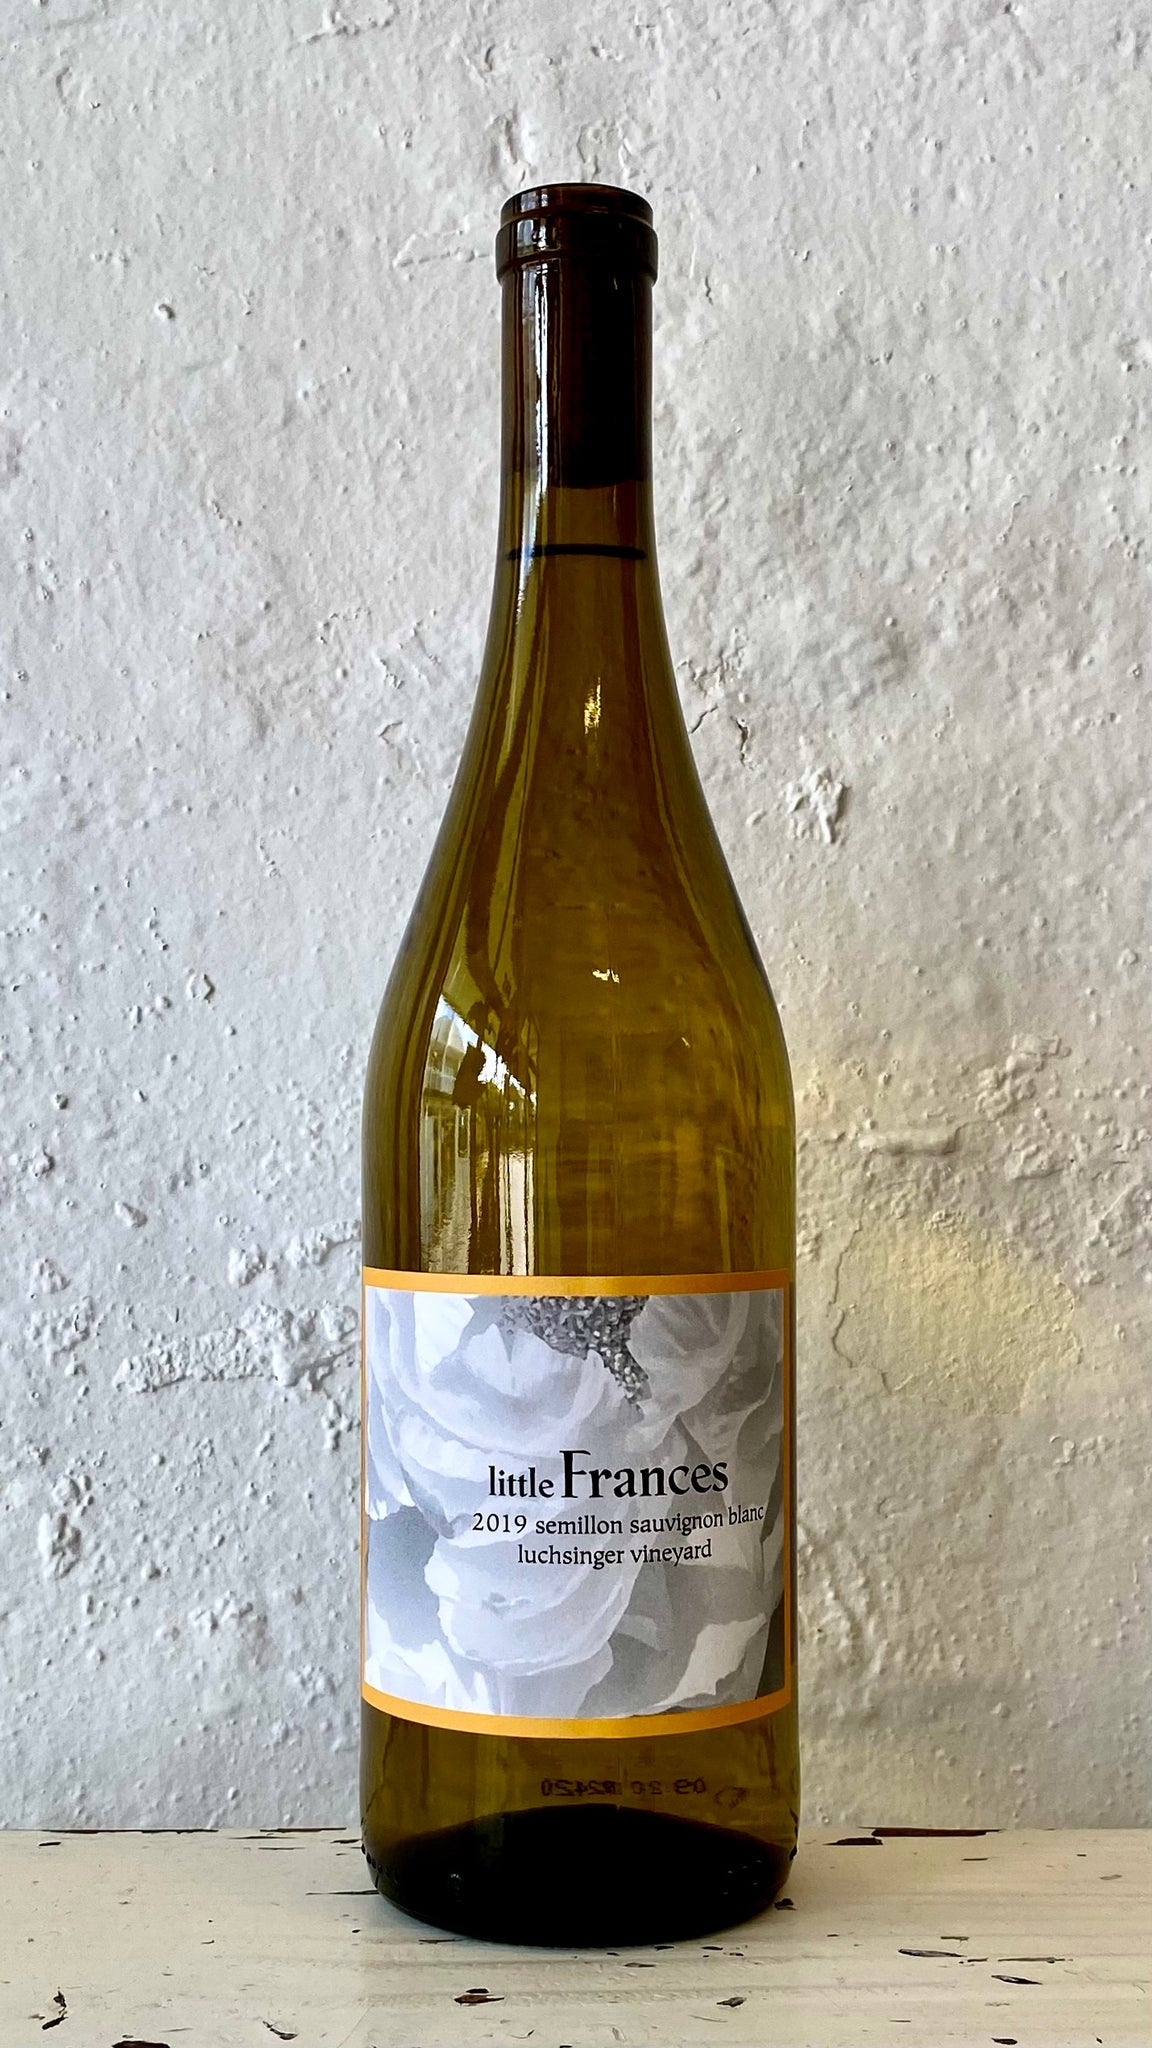 2019 Little Frances Semillon Sauvignon Blanc California